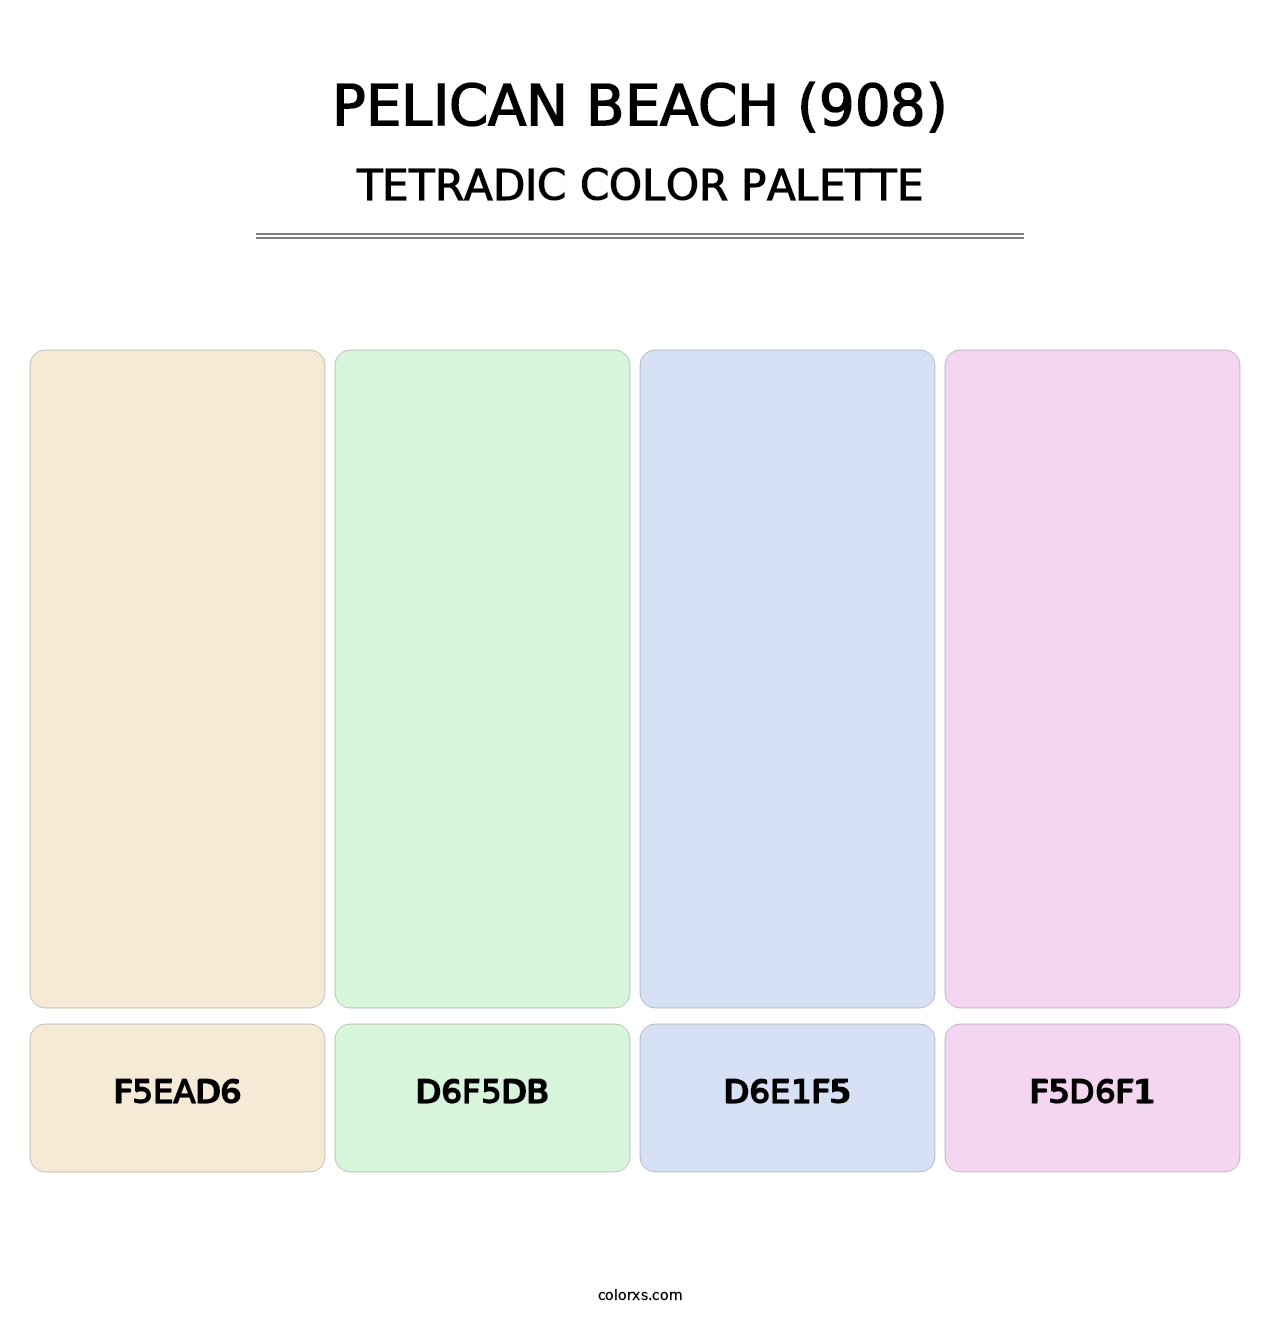 Pelican Beach (908) - Tetradic Color Palette